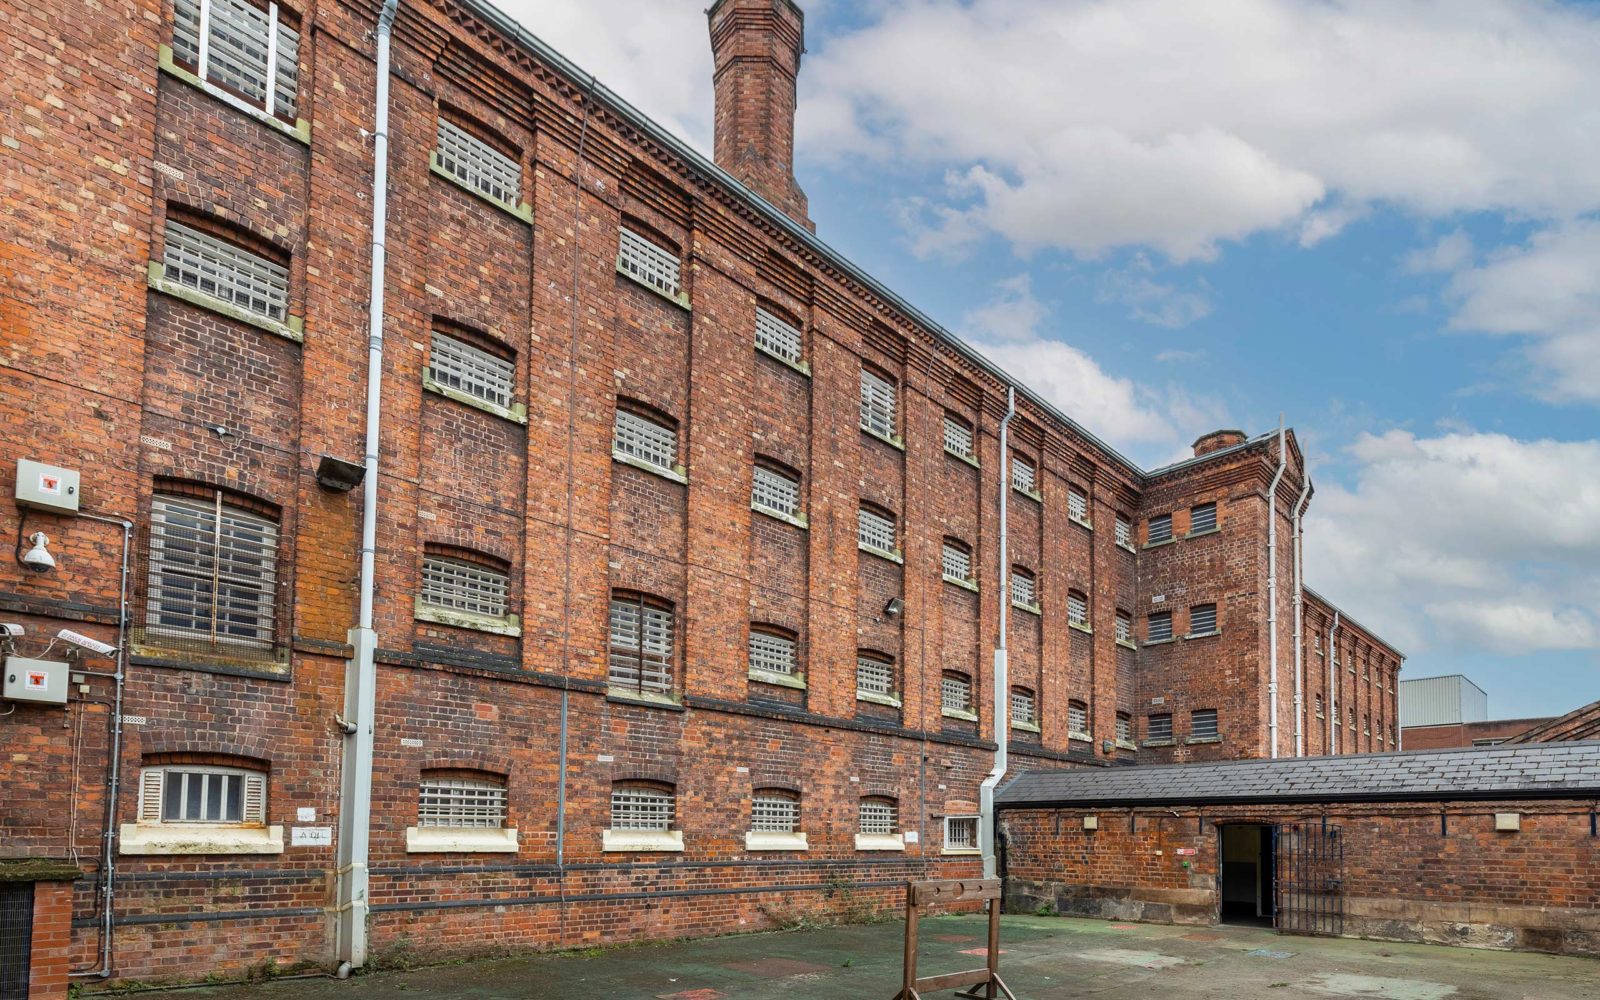 Shrewsbury Prison Venue Information